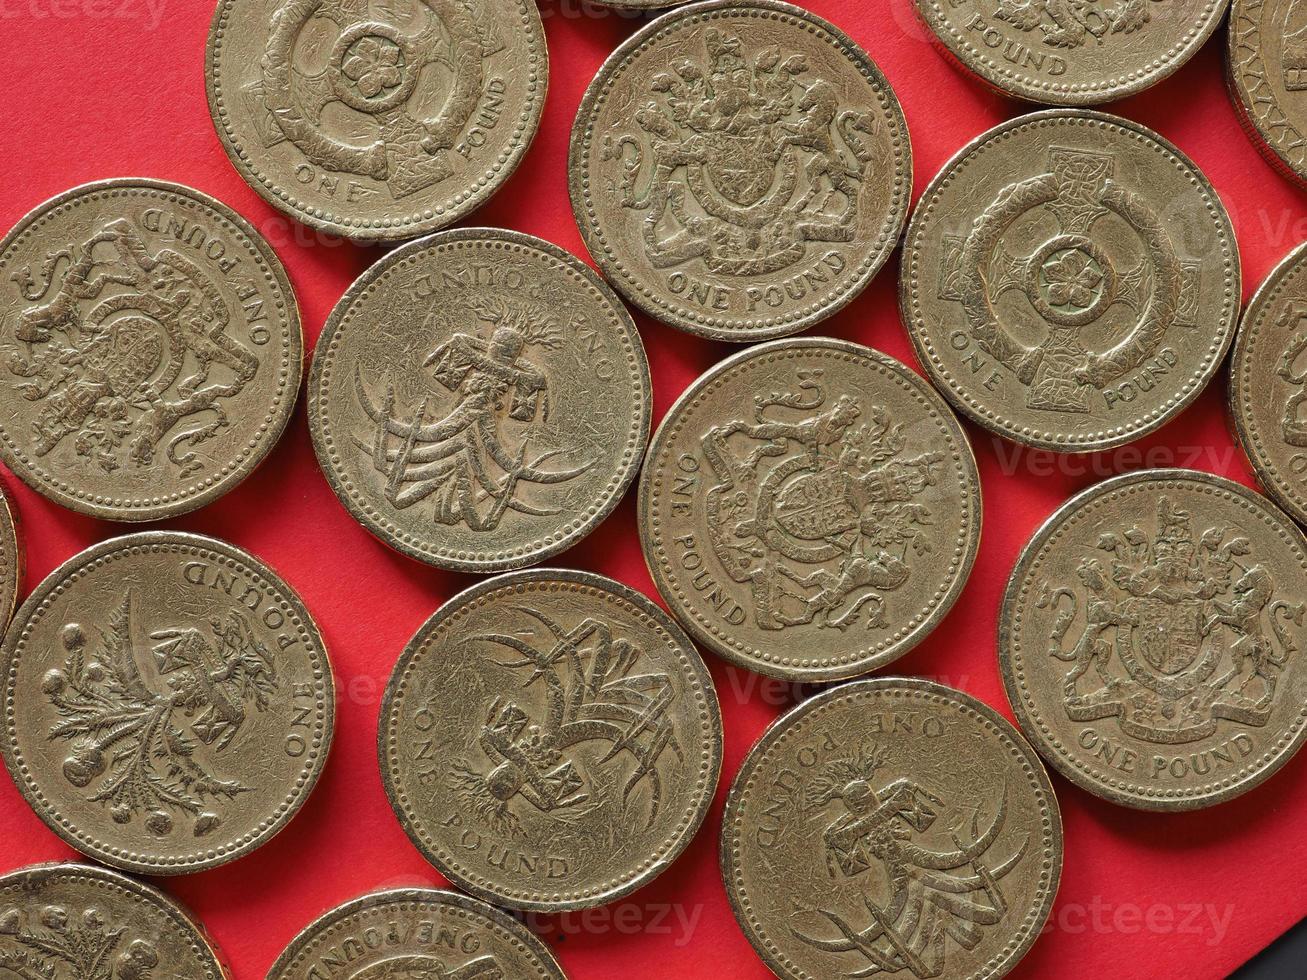 One Pound coins, United Kingdom photo